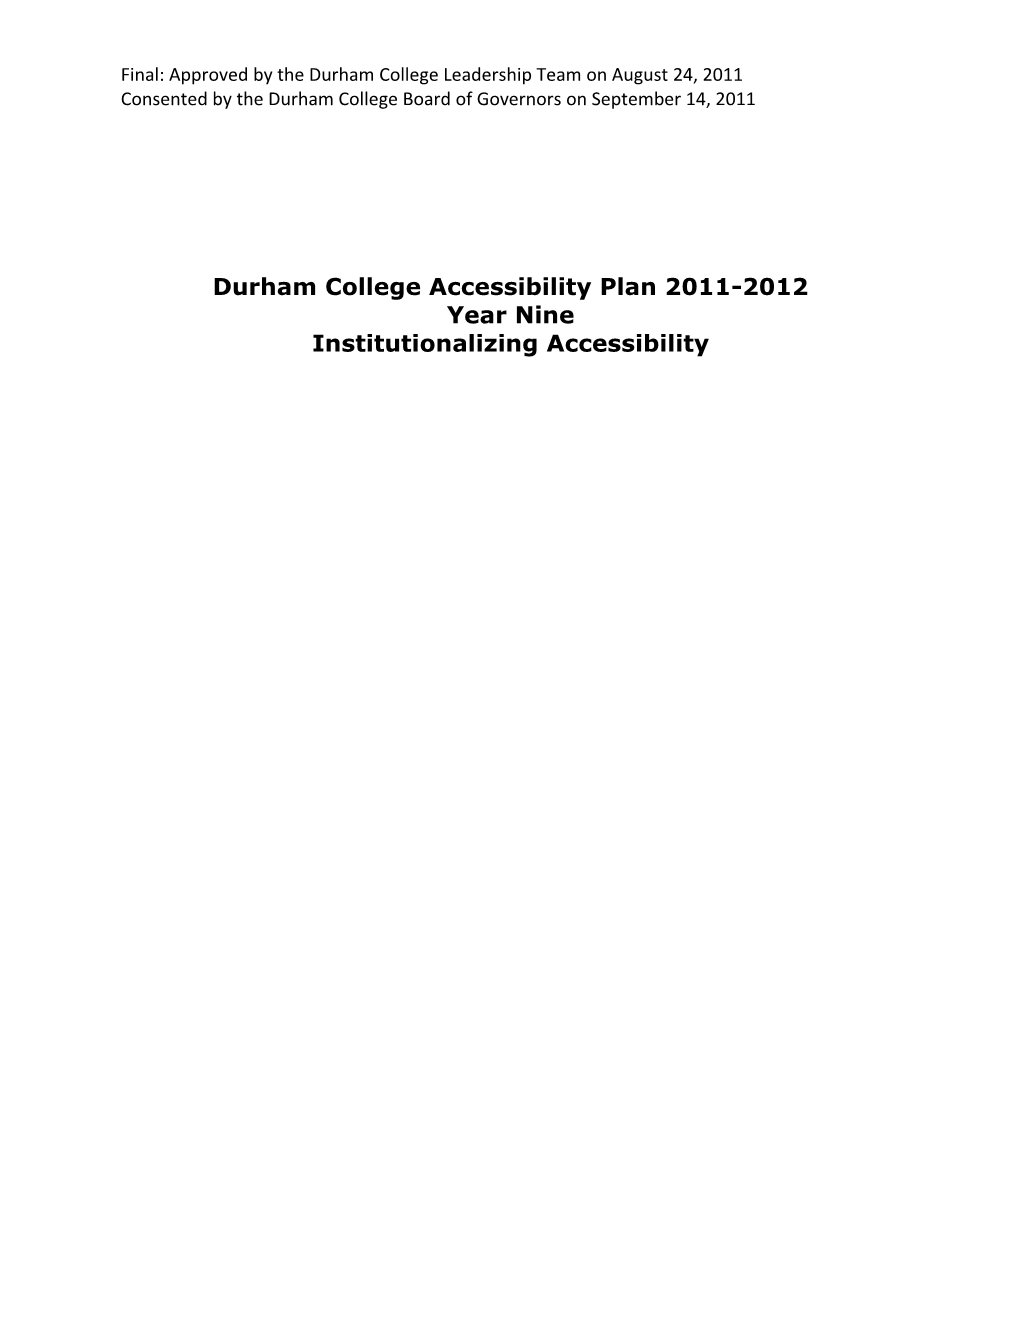 Durham Collegeaccessibility Plan 2011-2012